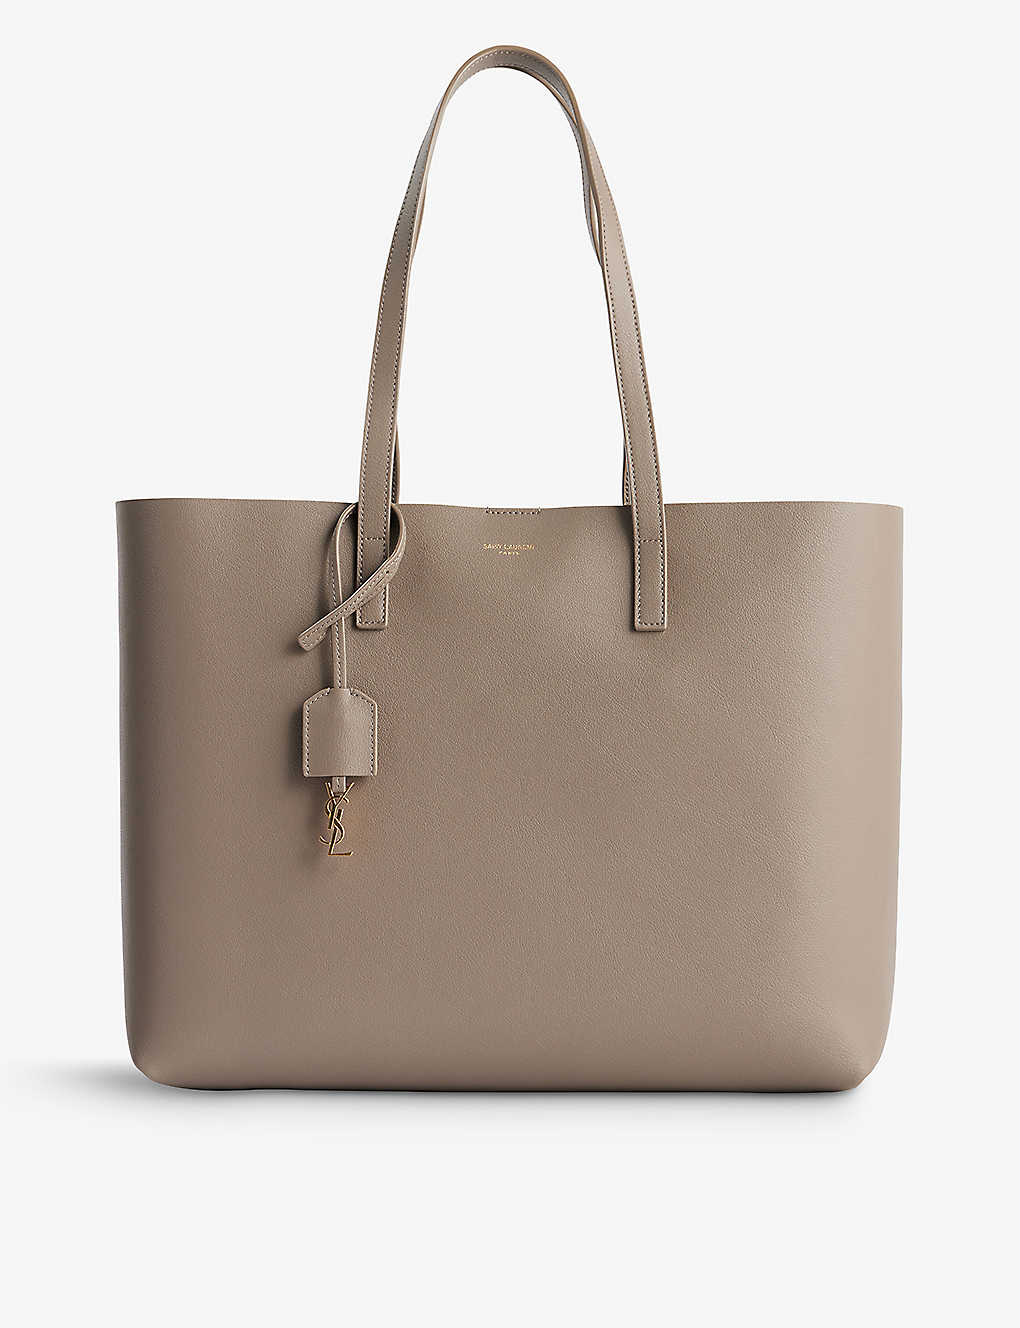 SAINT LAURENT - Logo-print leather tote bag | Selfridges.com